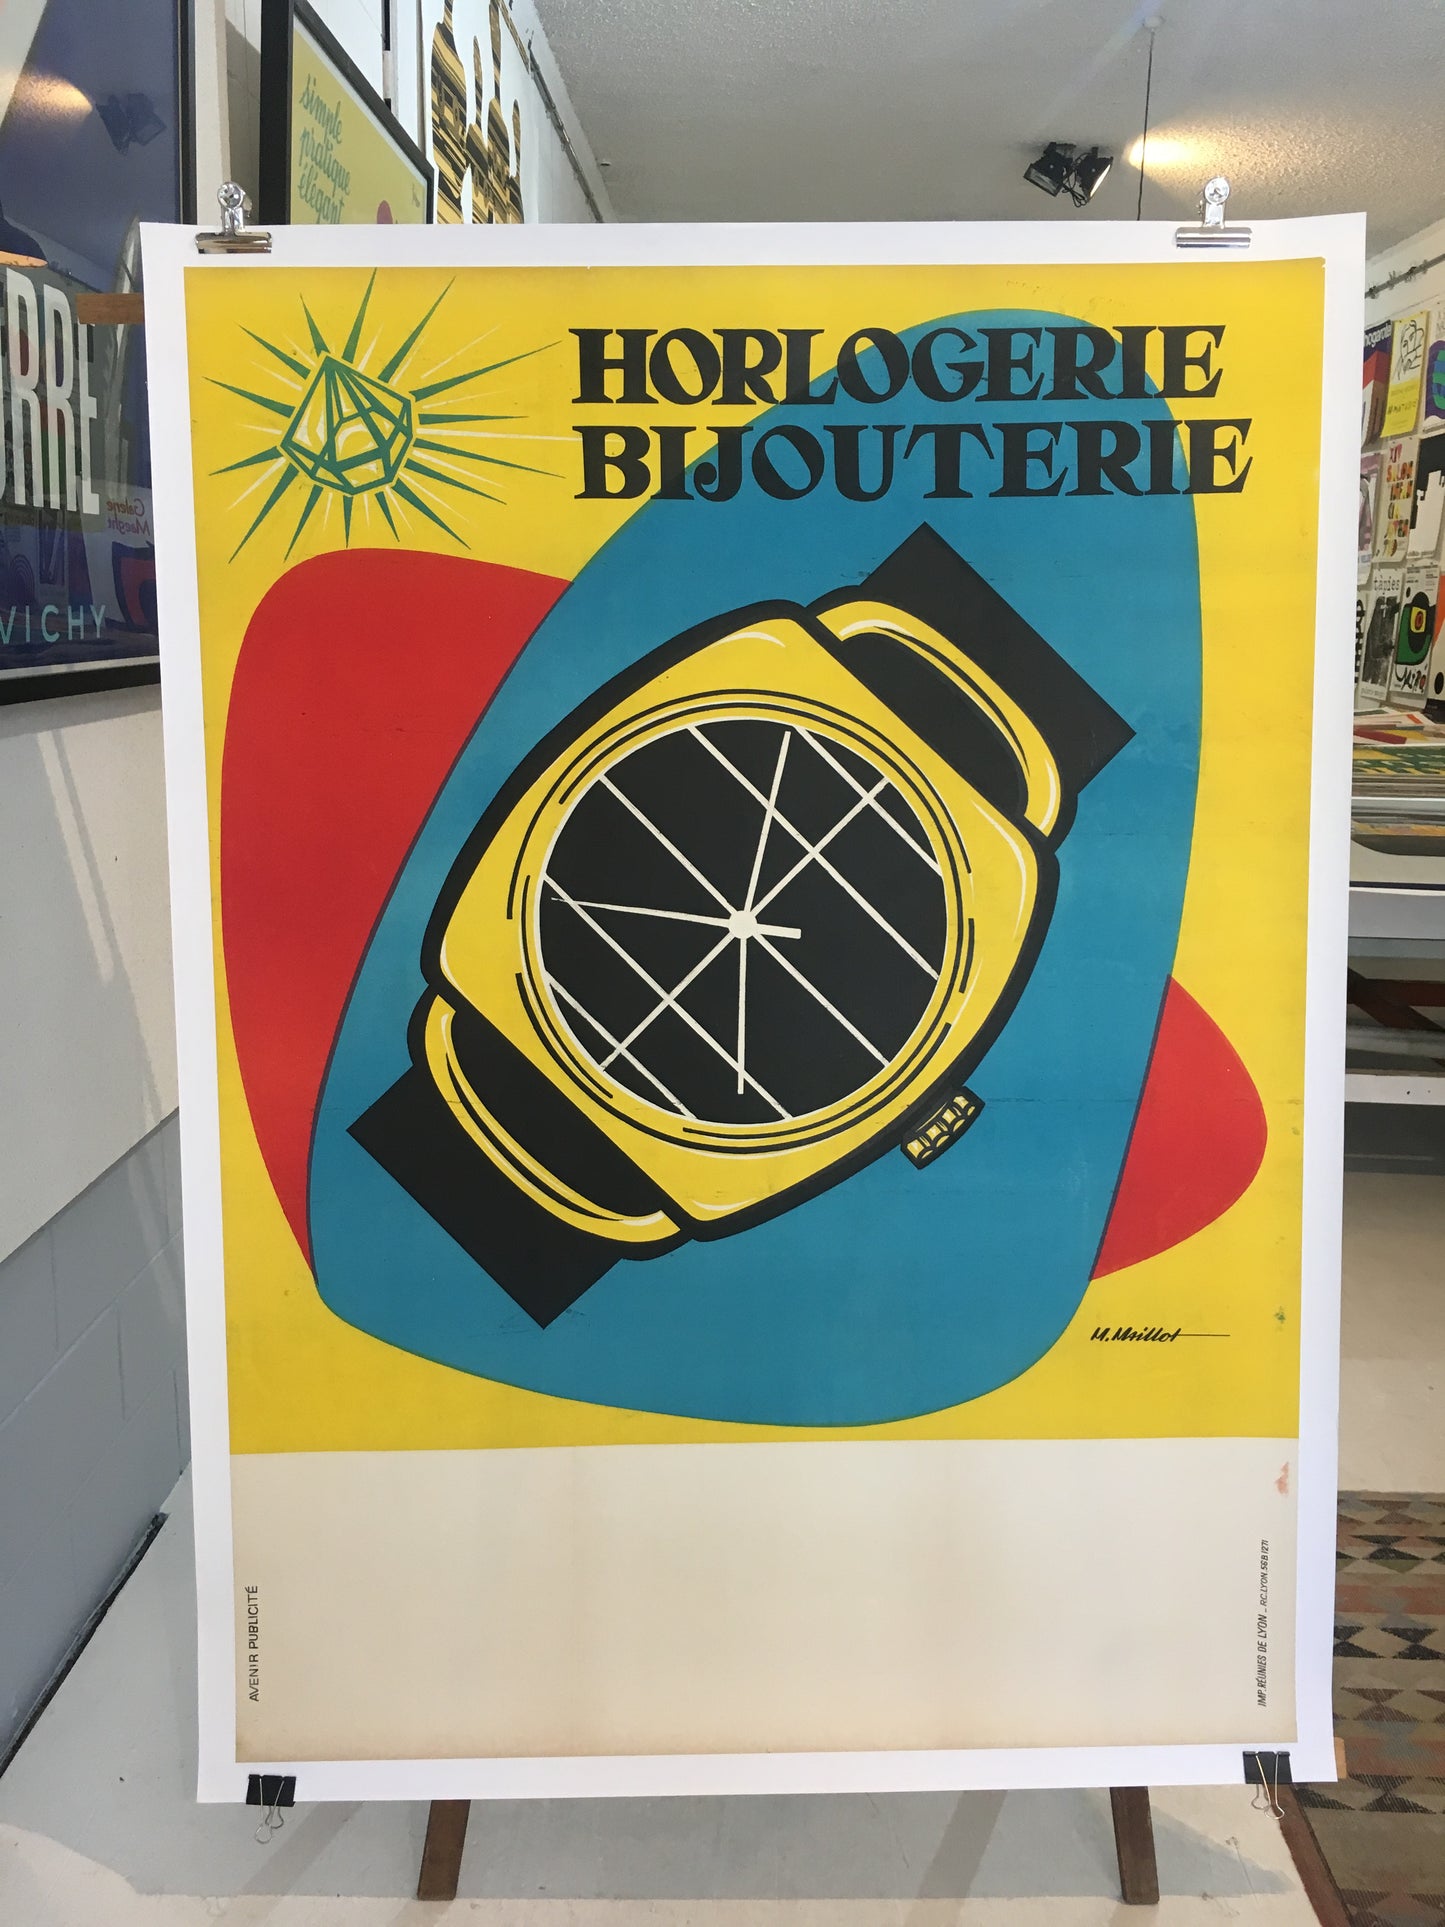 Horlogerie Bijouterie by M. Maillot